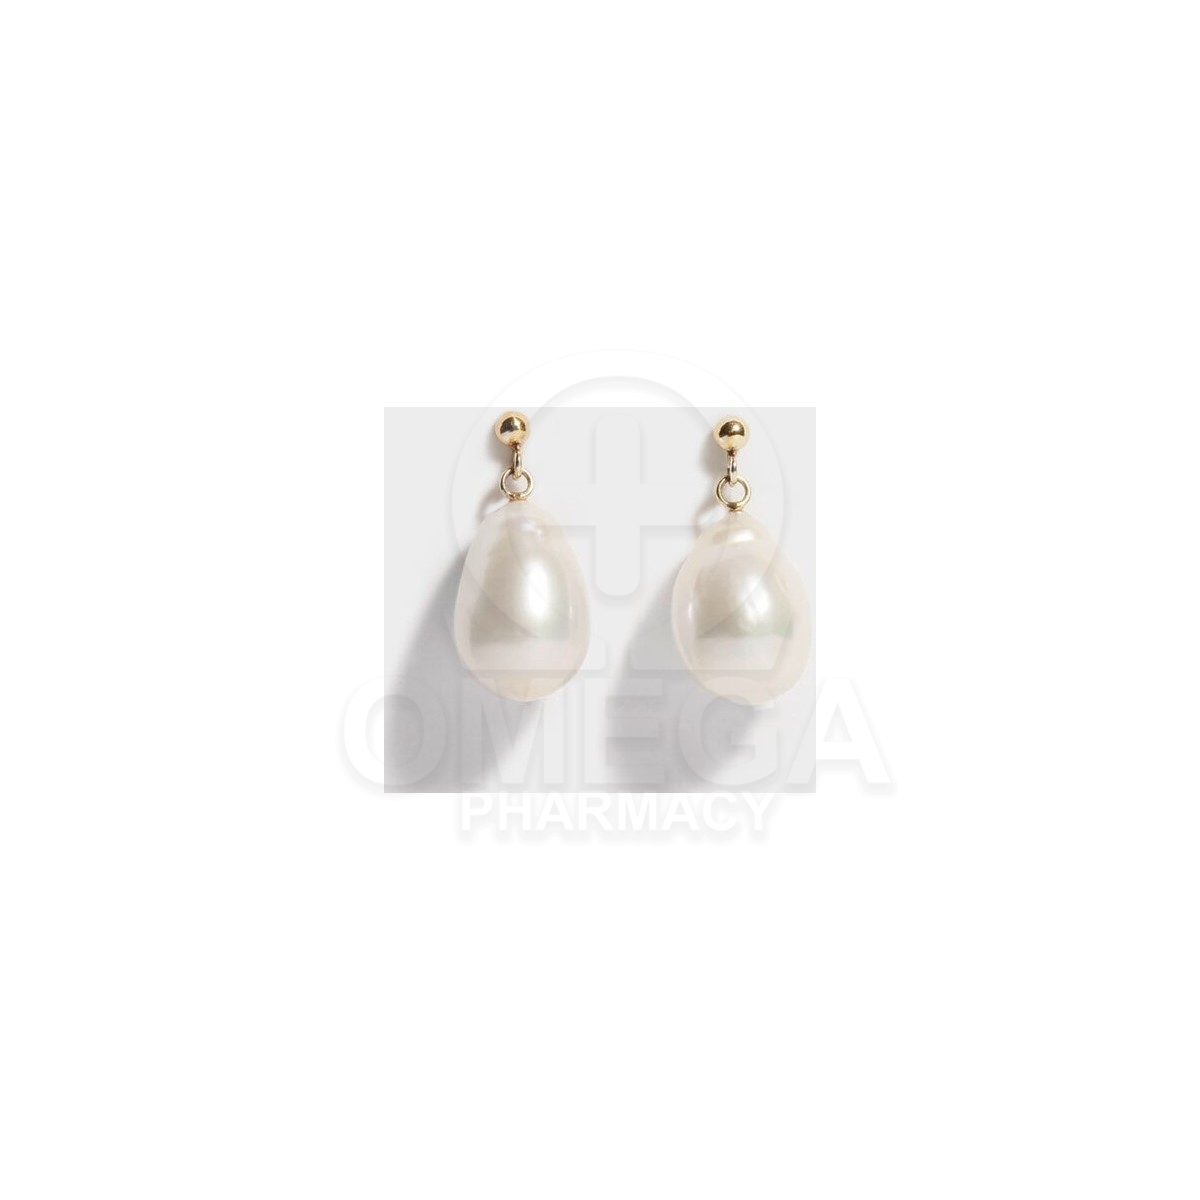 MEDISEI Dalee Jewels Earrings No 05416 Gold Plated Teardrop Pearl  Υποαλλεργικά Σκουλαρίκια από Ασήμι 925 Επιχρυσωμένα, Σταγόνα Π